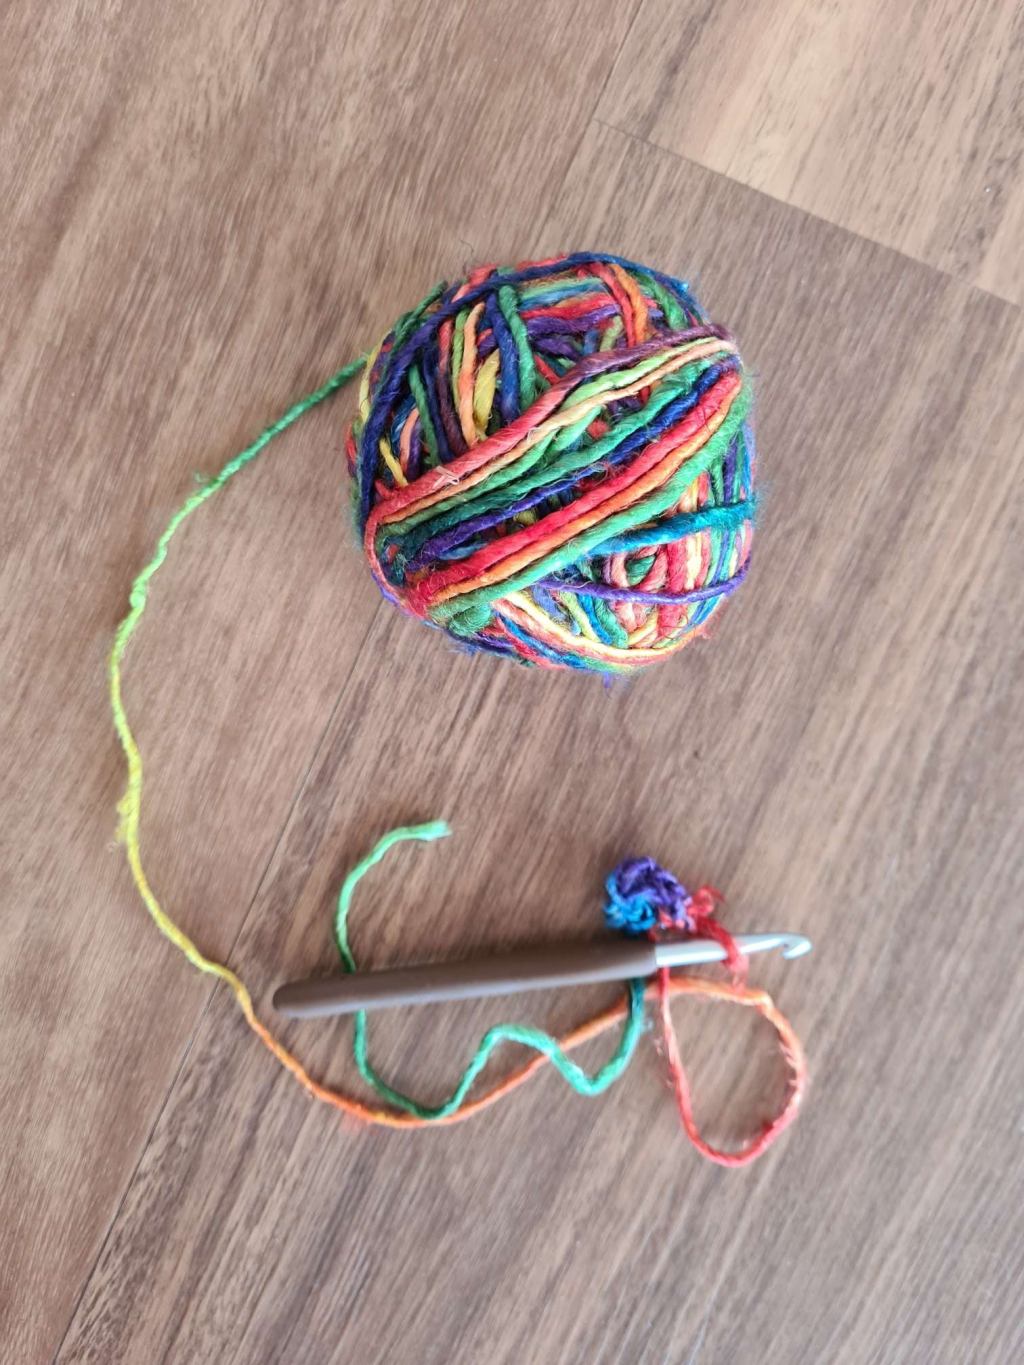 Blogtober #6 – Rainy day crochet.